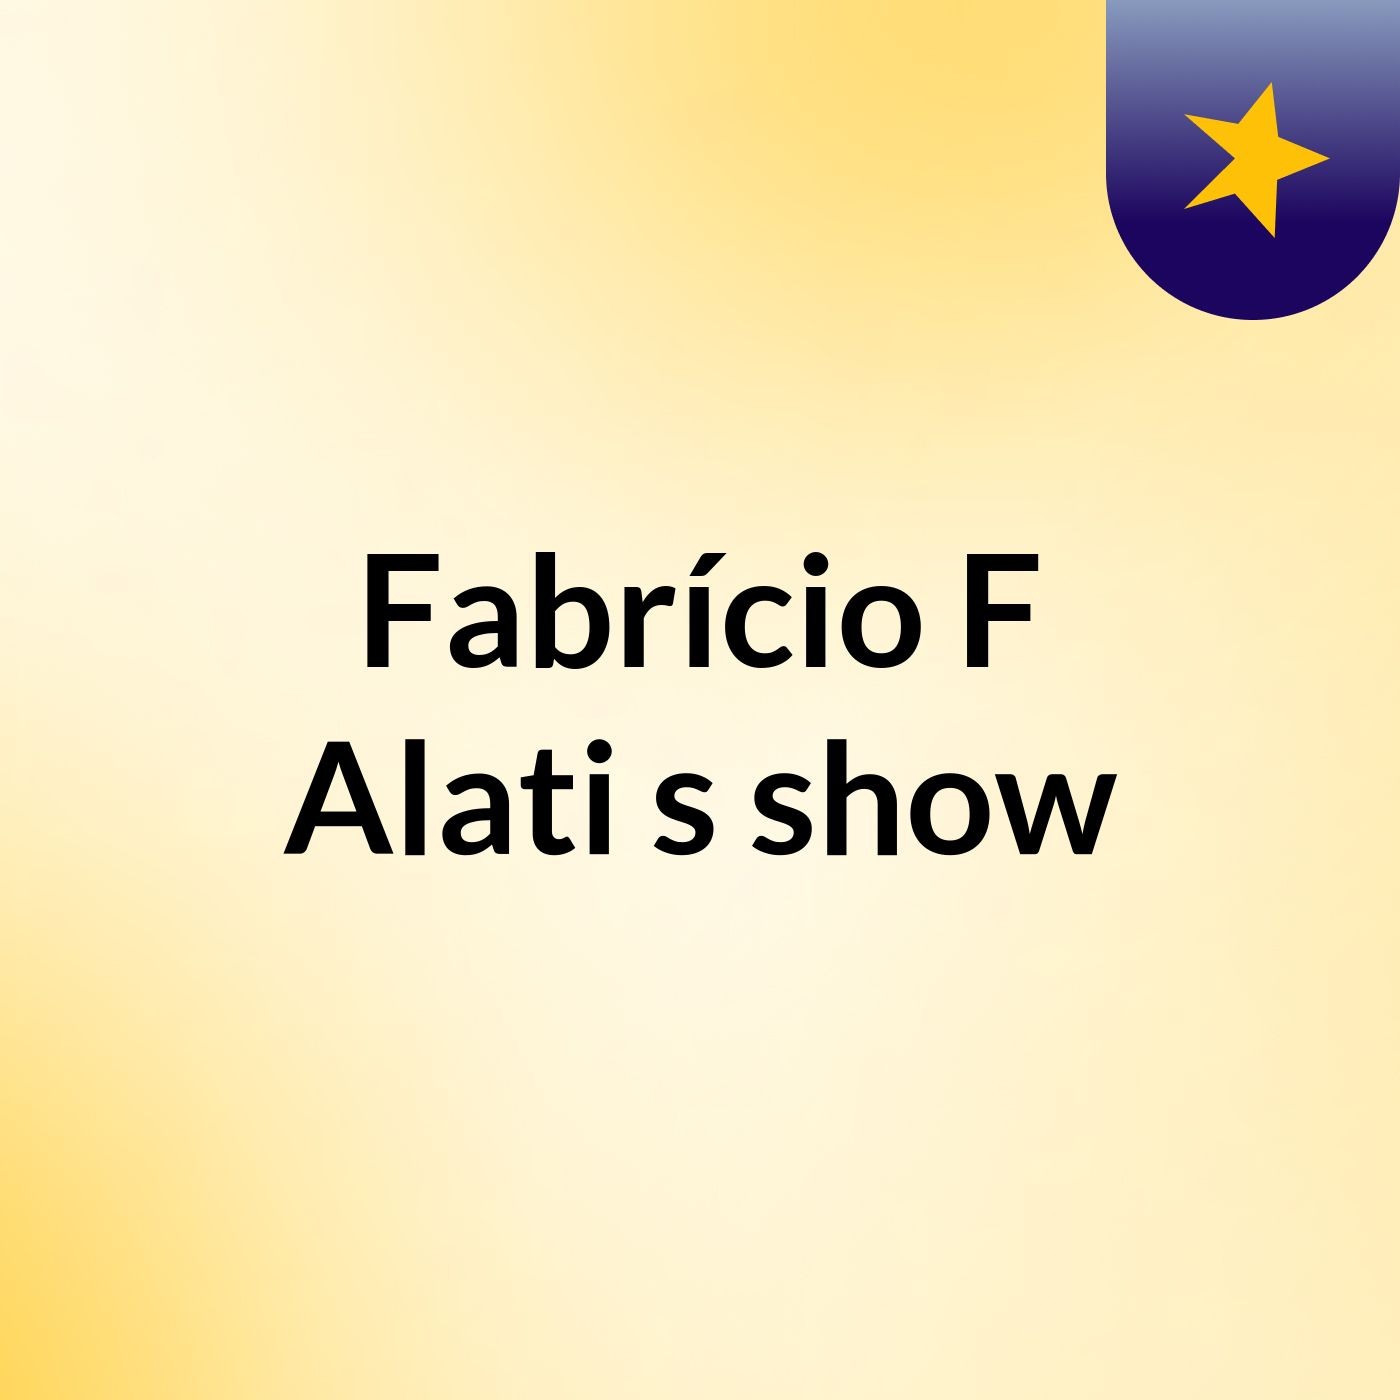 Fabrício F Alati's show